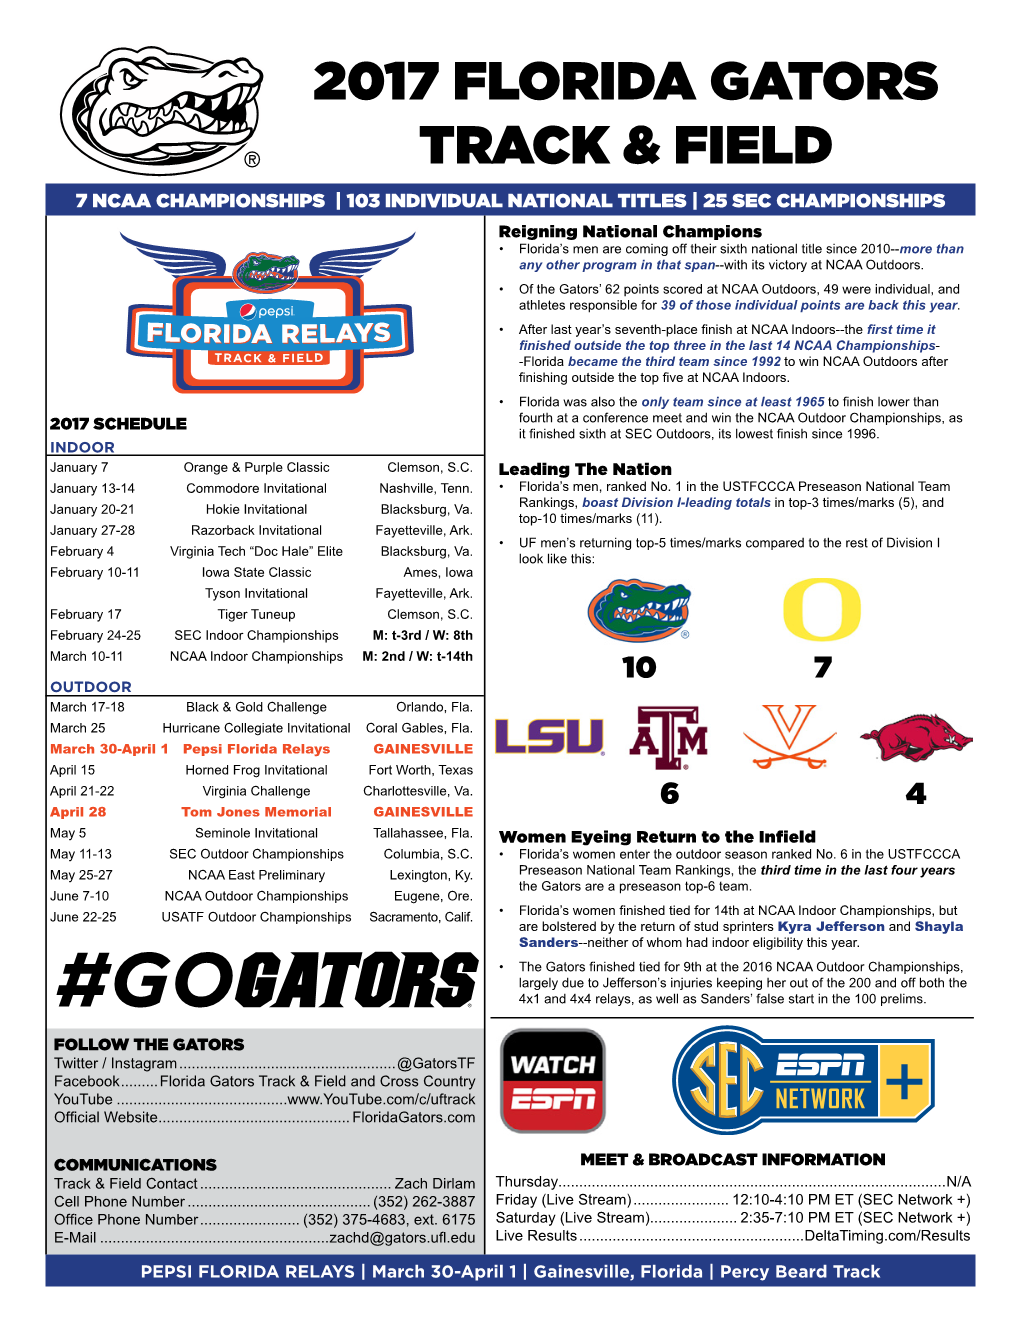 2017 Florida Gators Track & Field